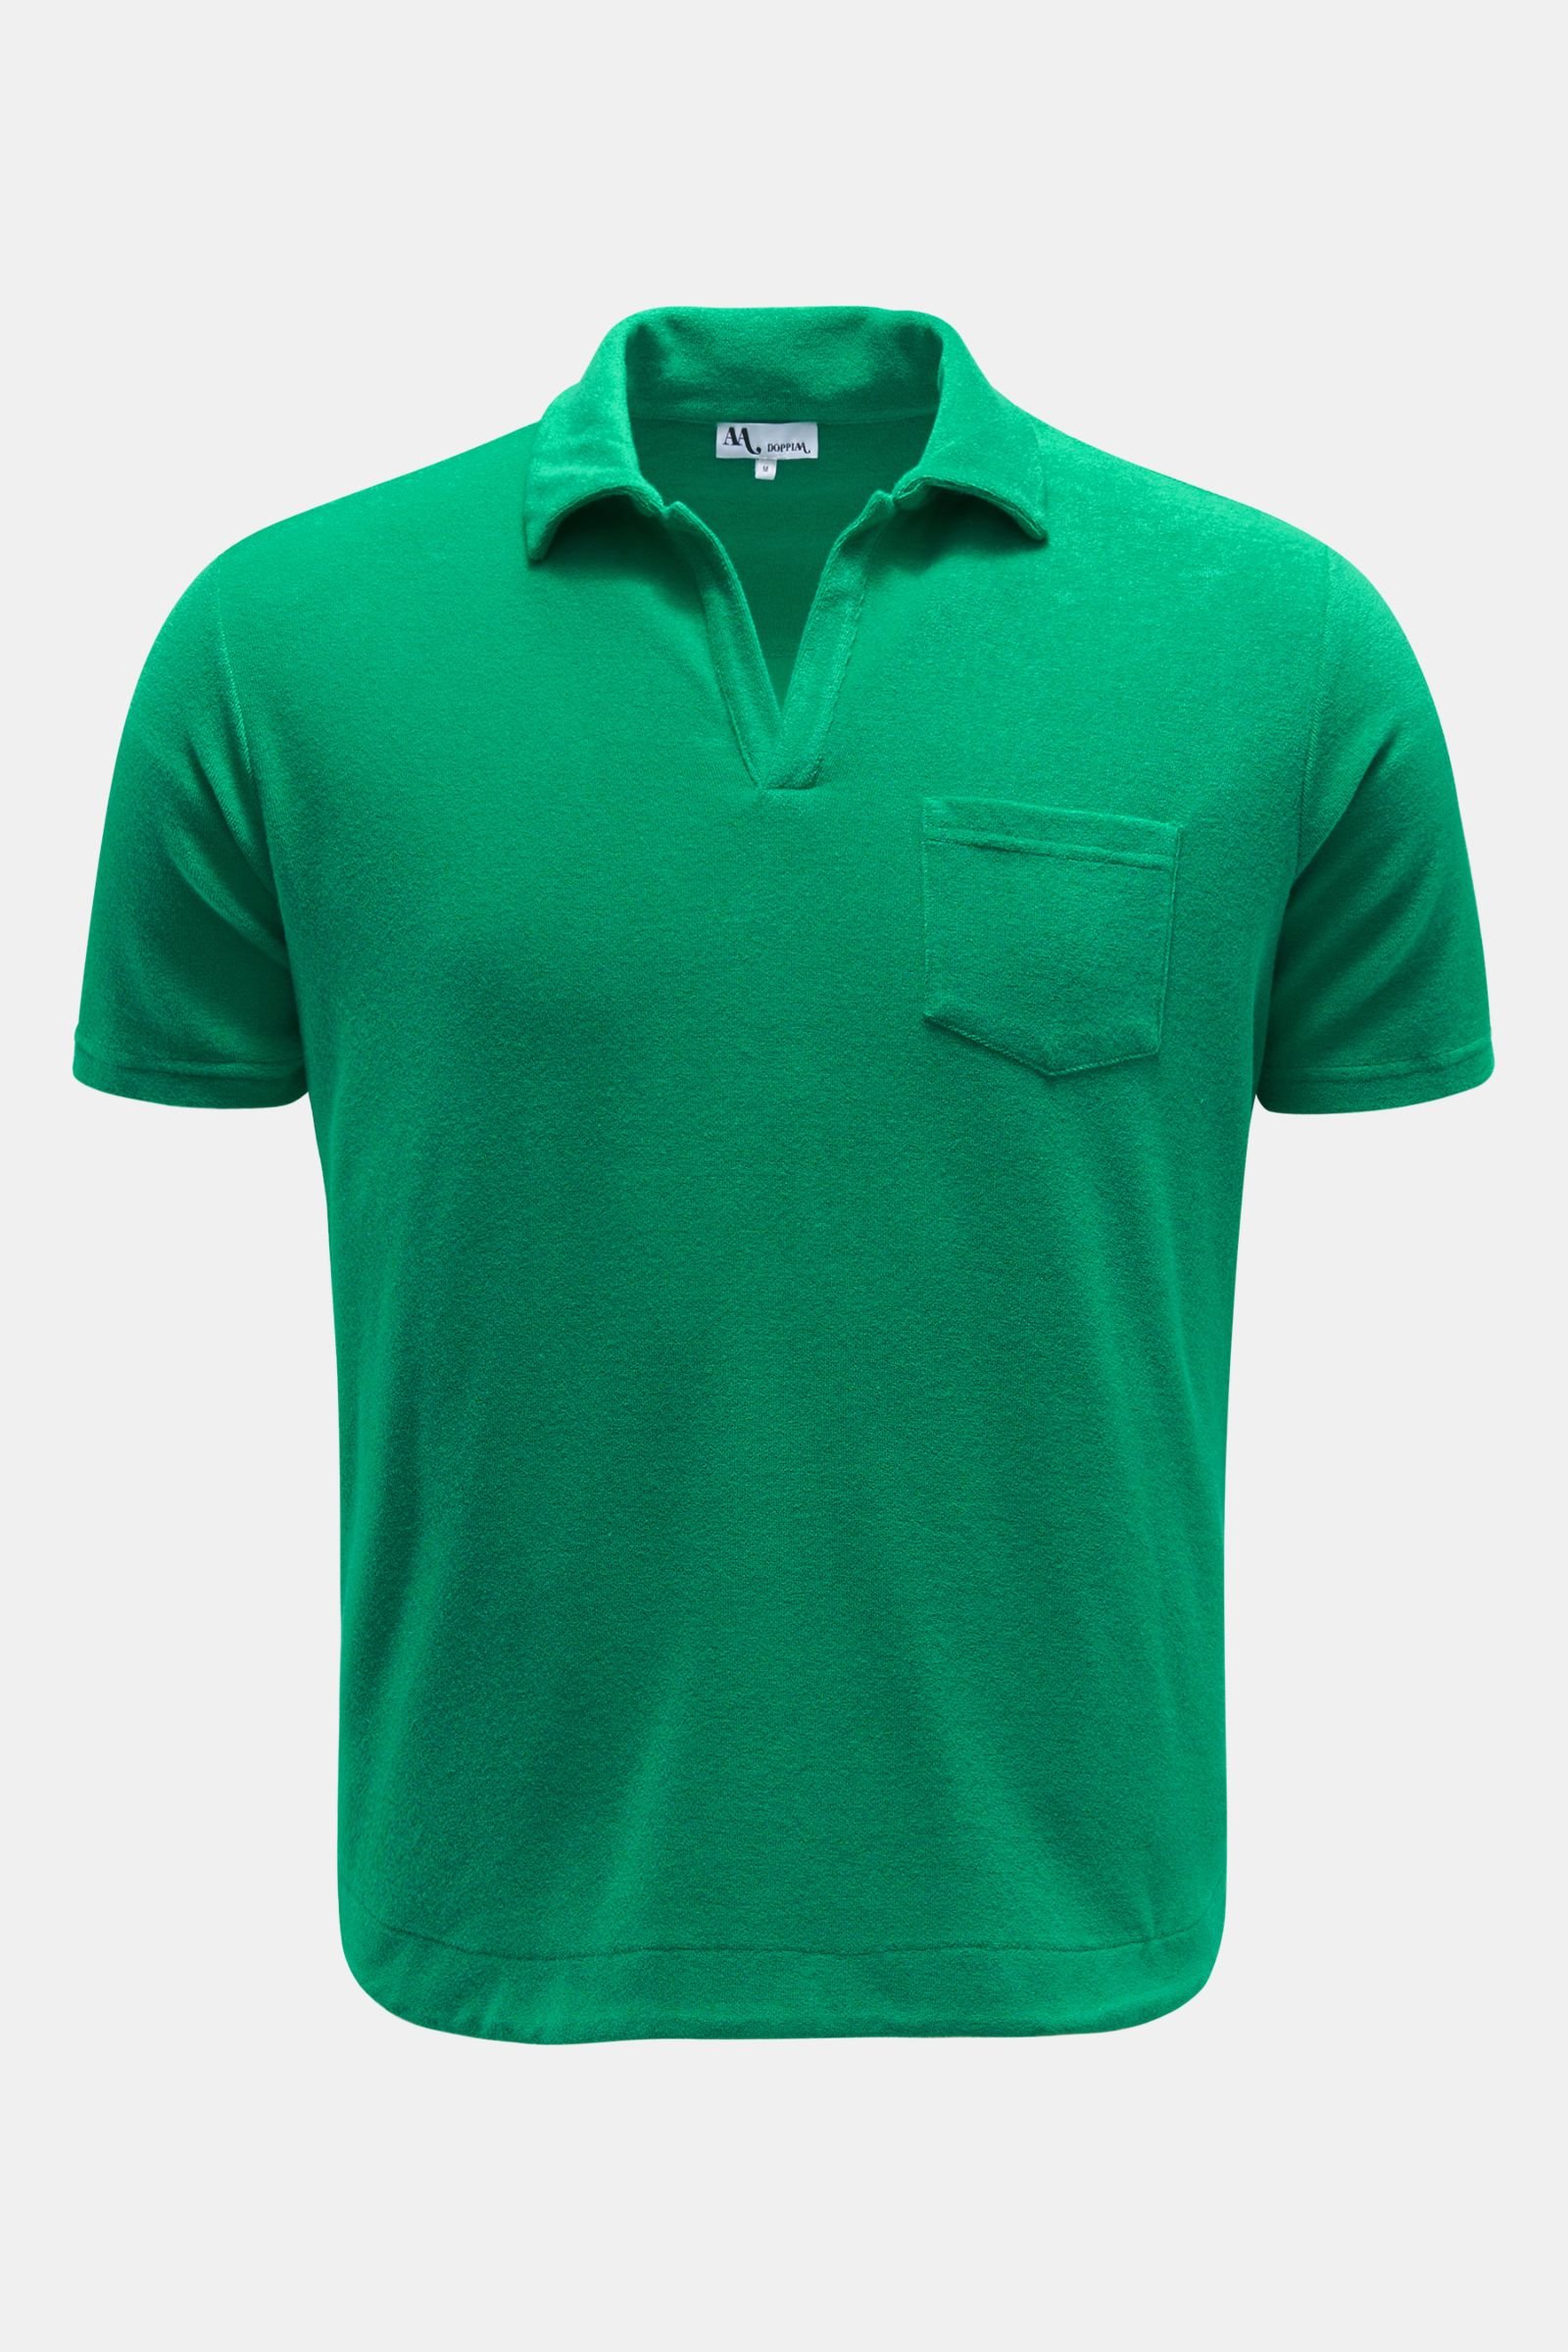 Terry polo shirt 'Aattilio' green